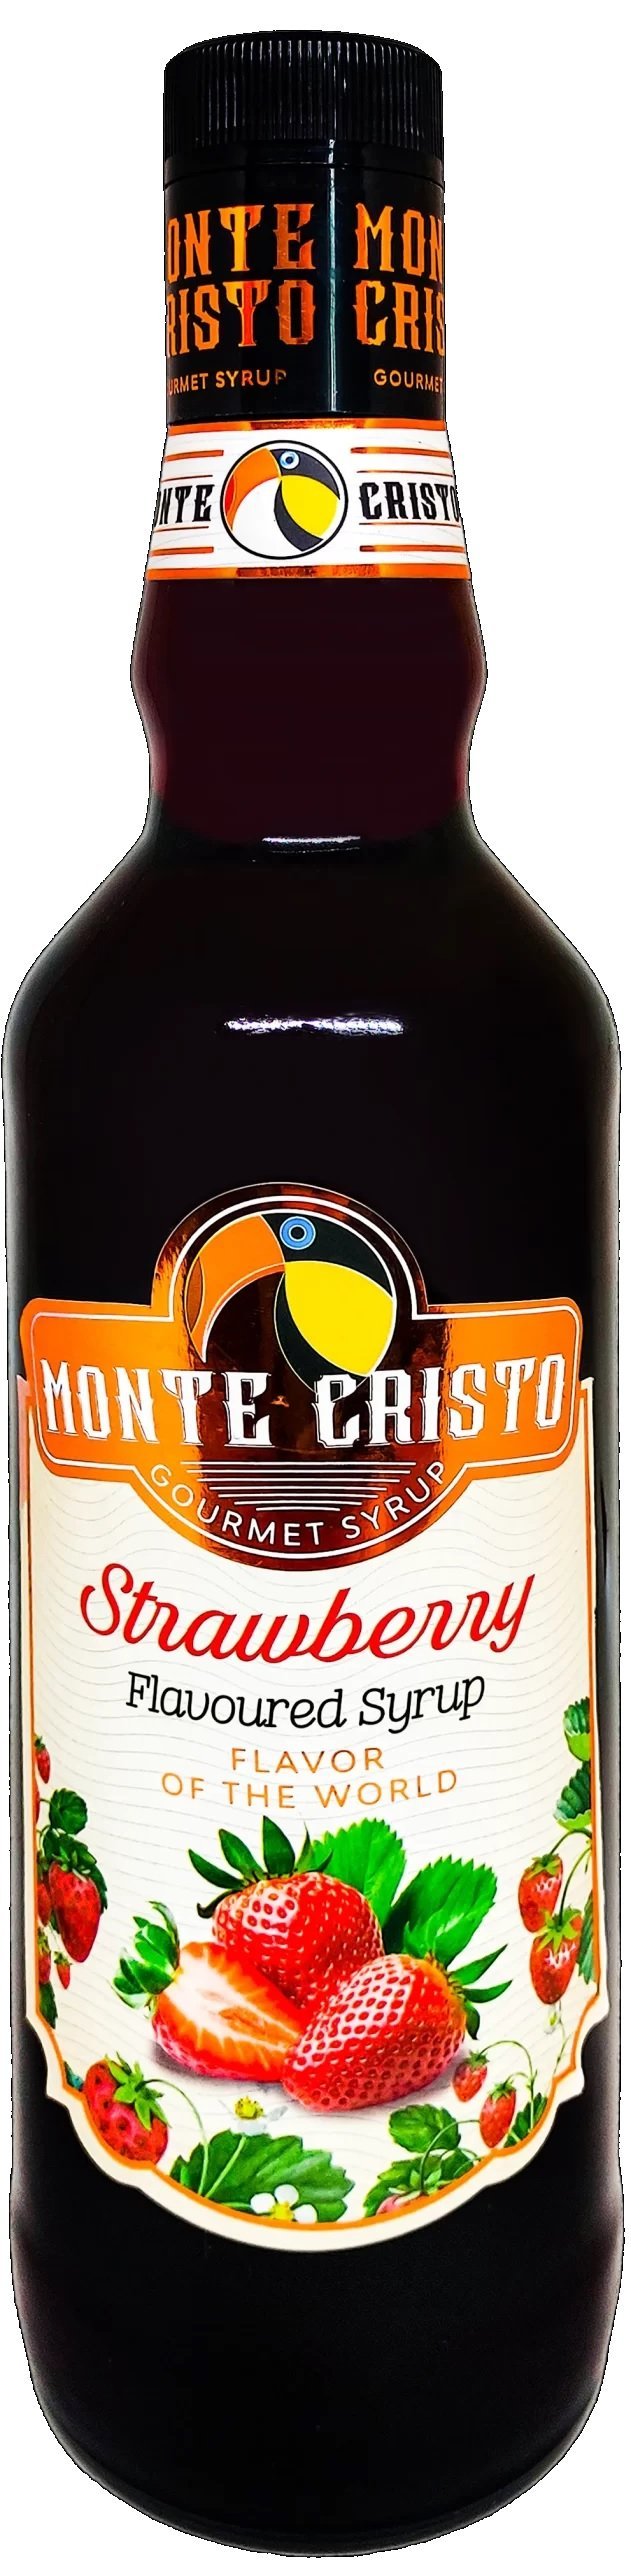 Monte Cristo Çilek (Strawberry) Aromalı Şurup 700 ml.